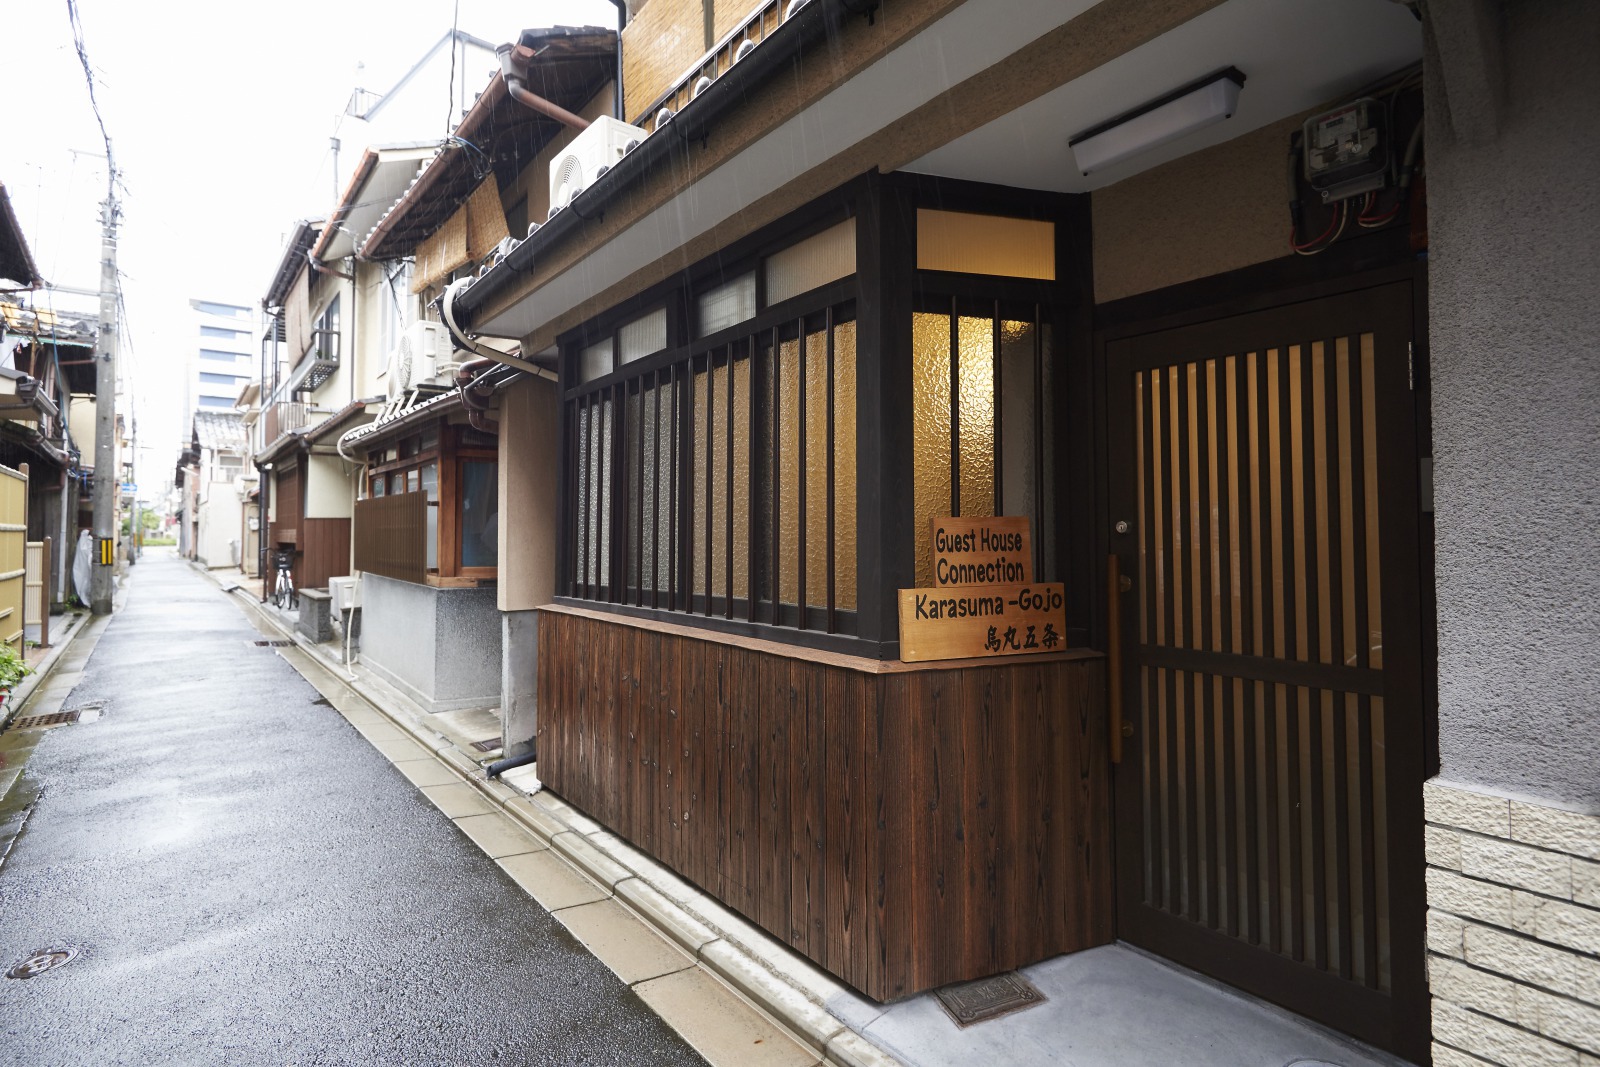 Guest House Connection Karasuma-Gojo